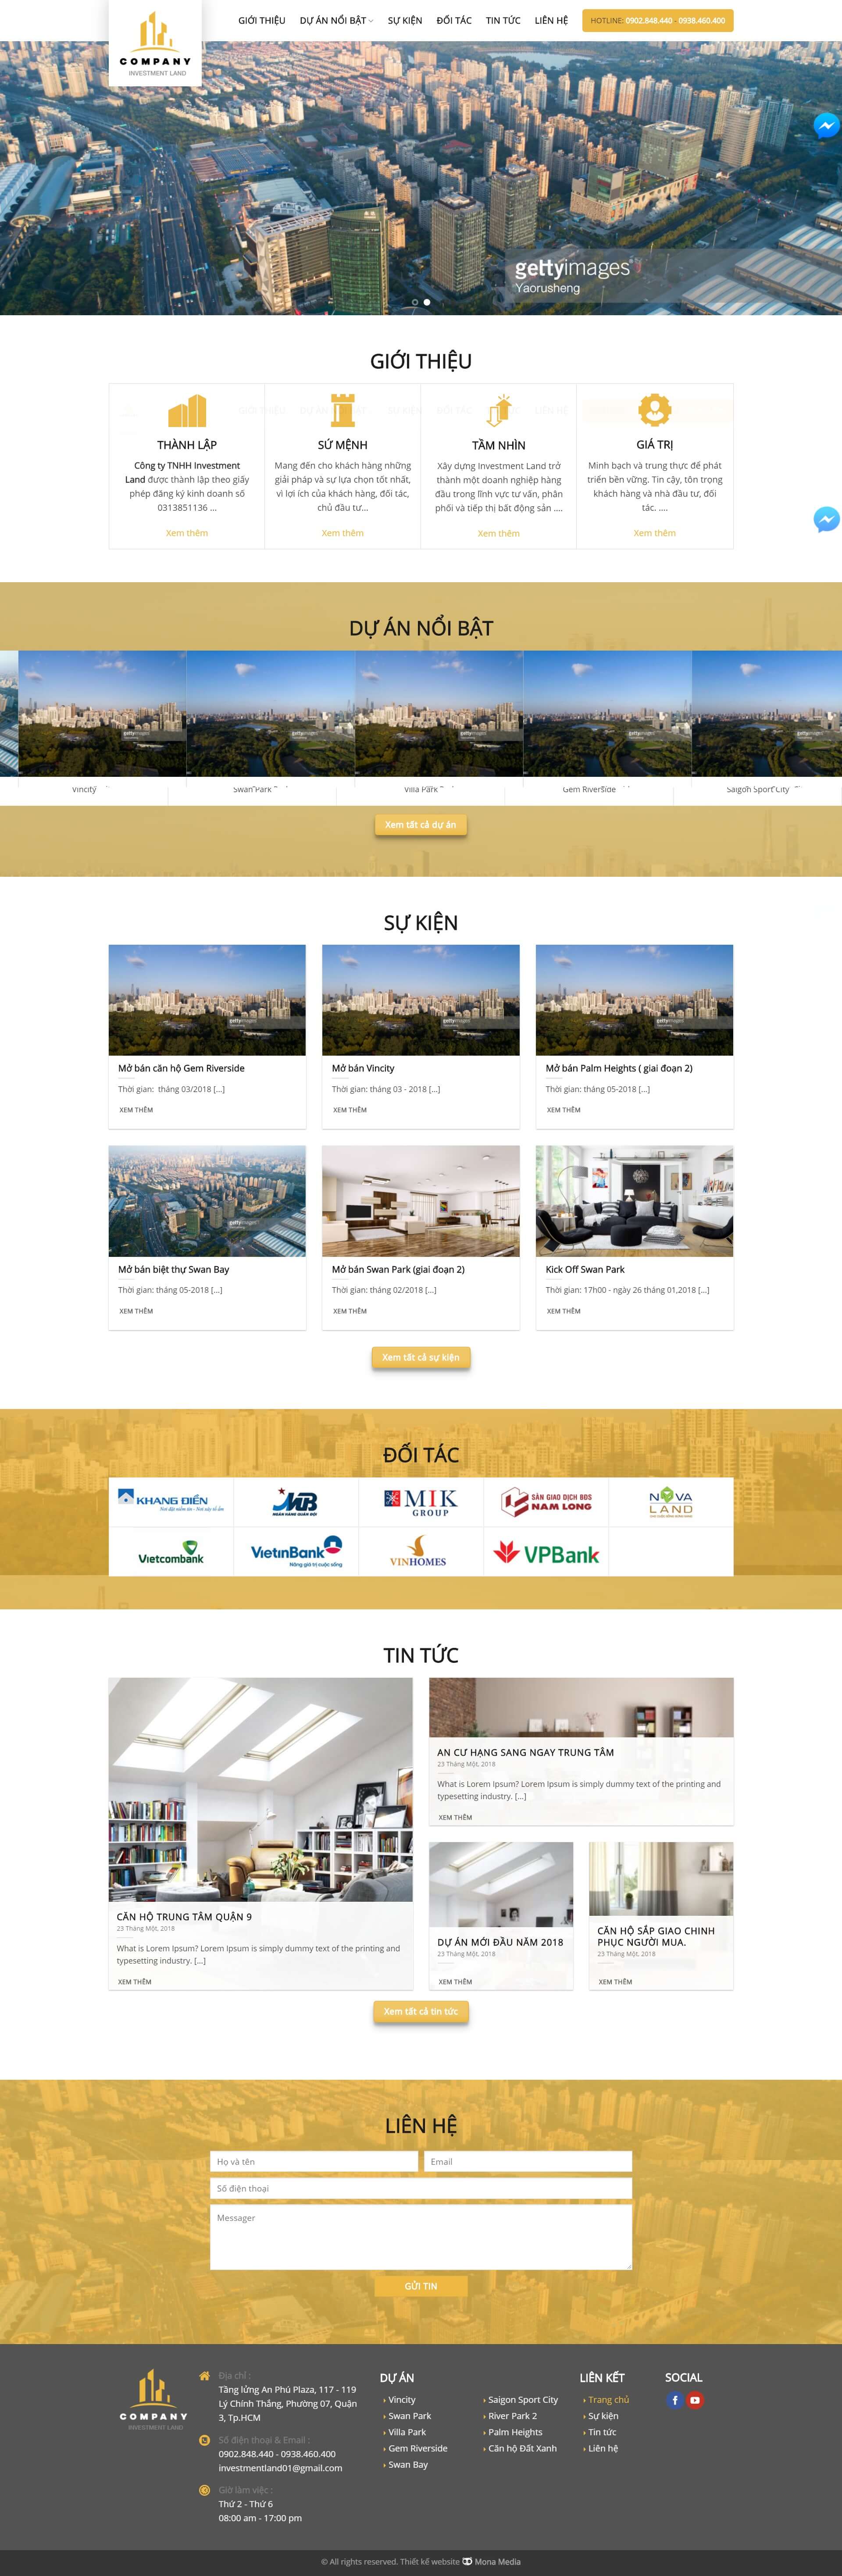 Mẫu website về bất động sản tương tự Investmentland